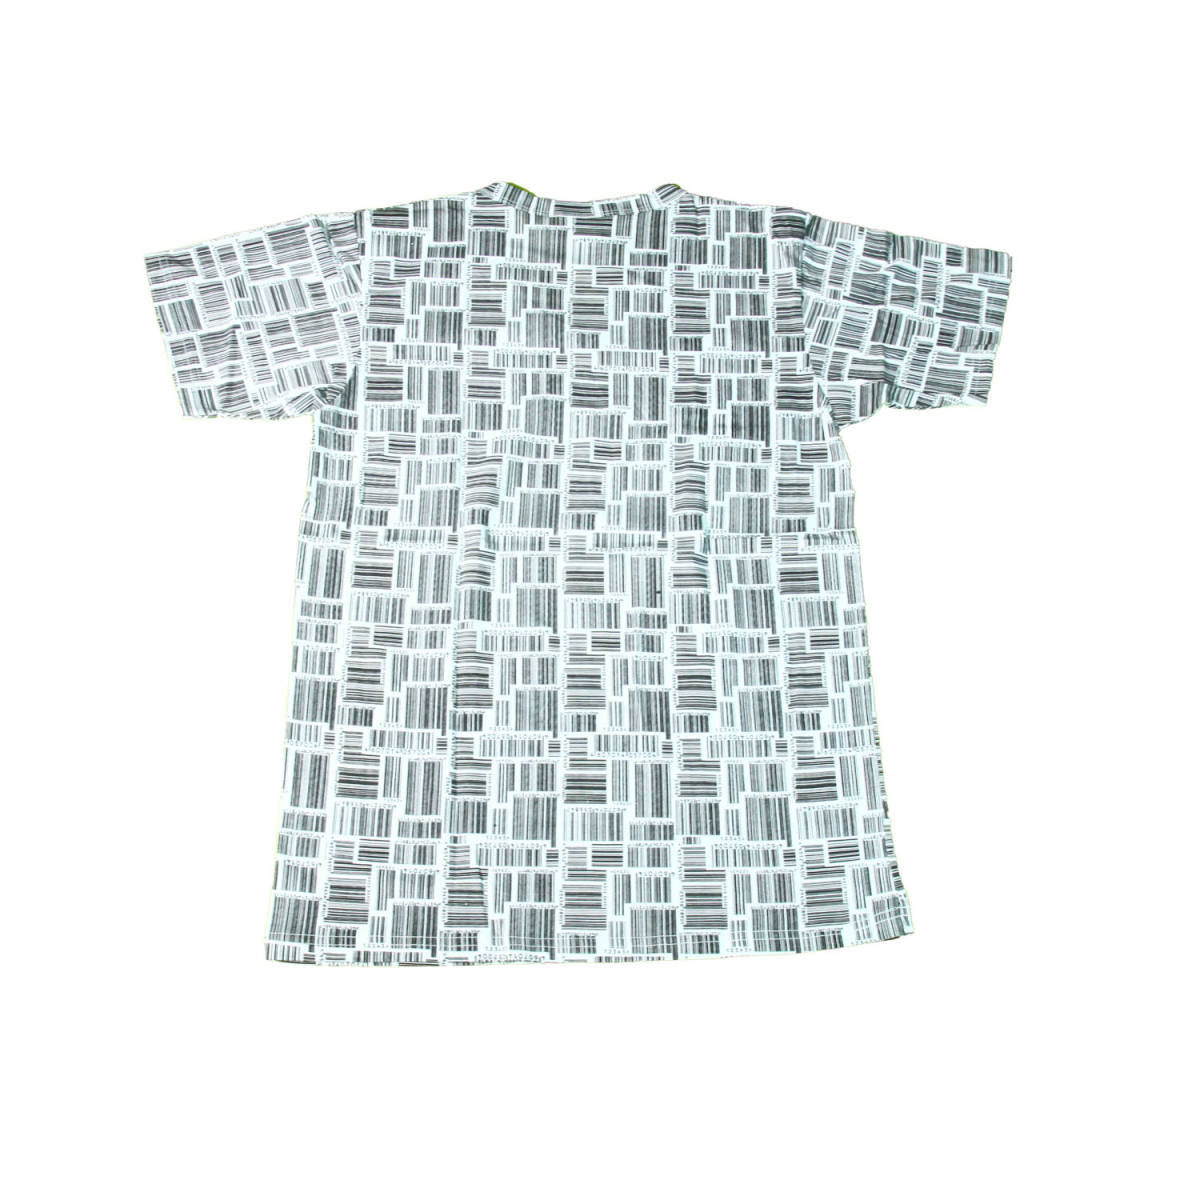 Vネック バーコード アート お洒落 買い物 スーパー サマー 夏 ストリート系 デザインTシャツ おもしろTシャツ メンズTシャツ 半袖 ★N118M_画像3